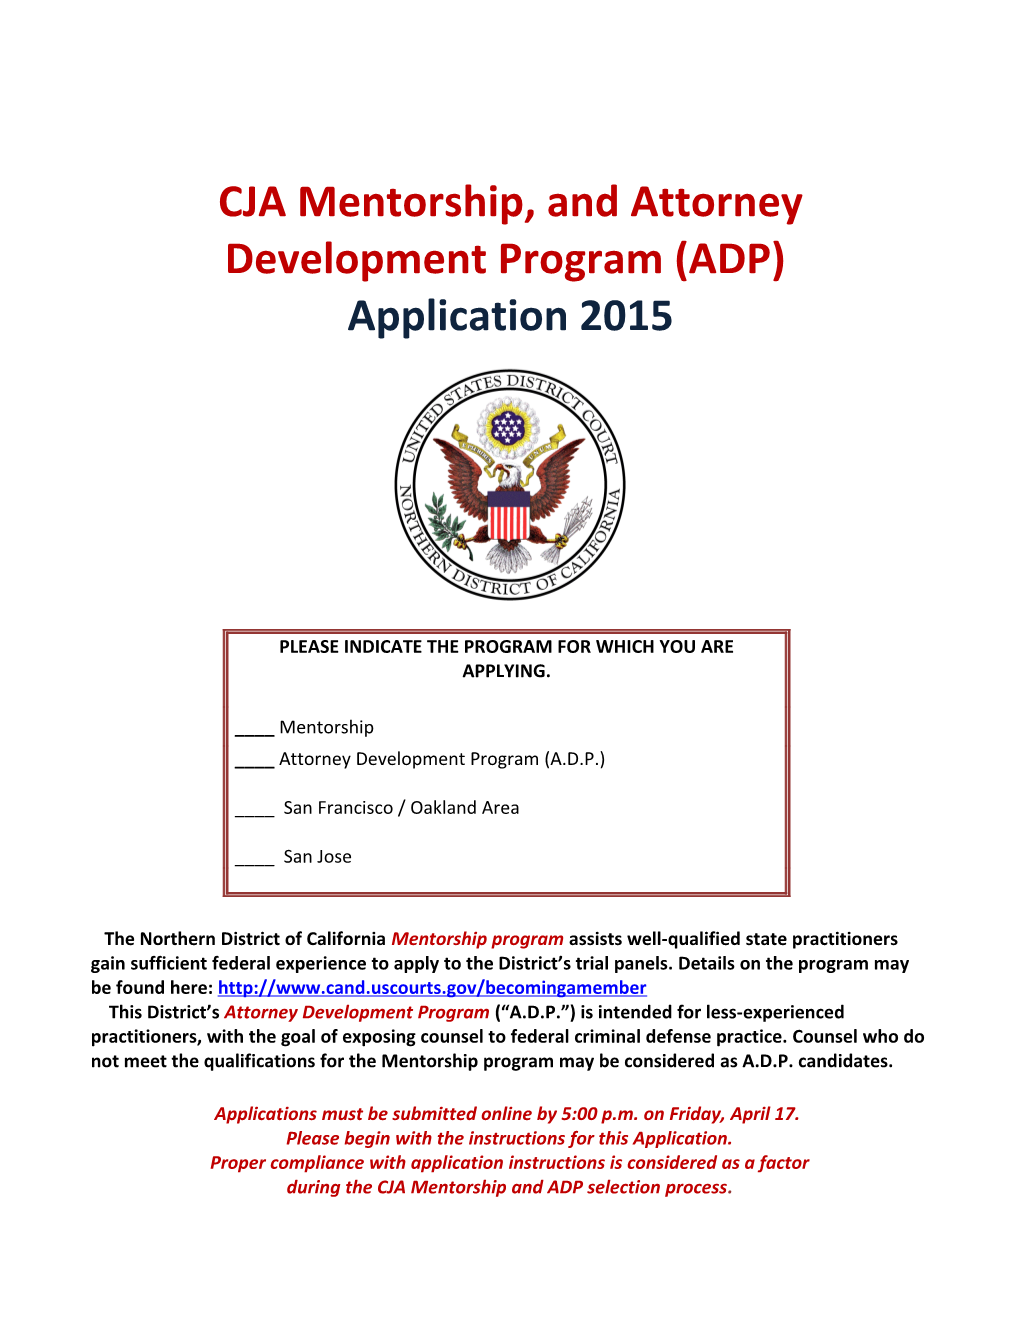 CJA Mentor ADP Application ND Cal 2014